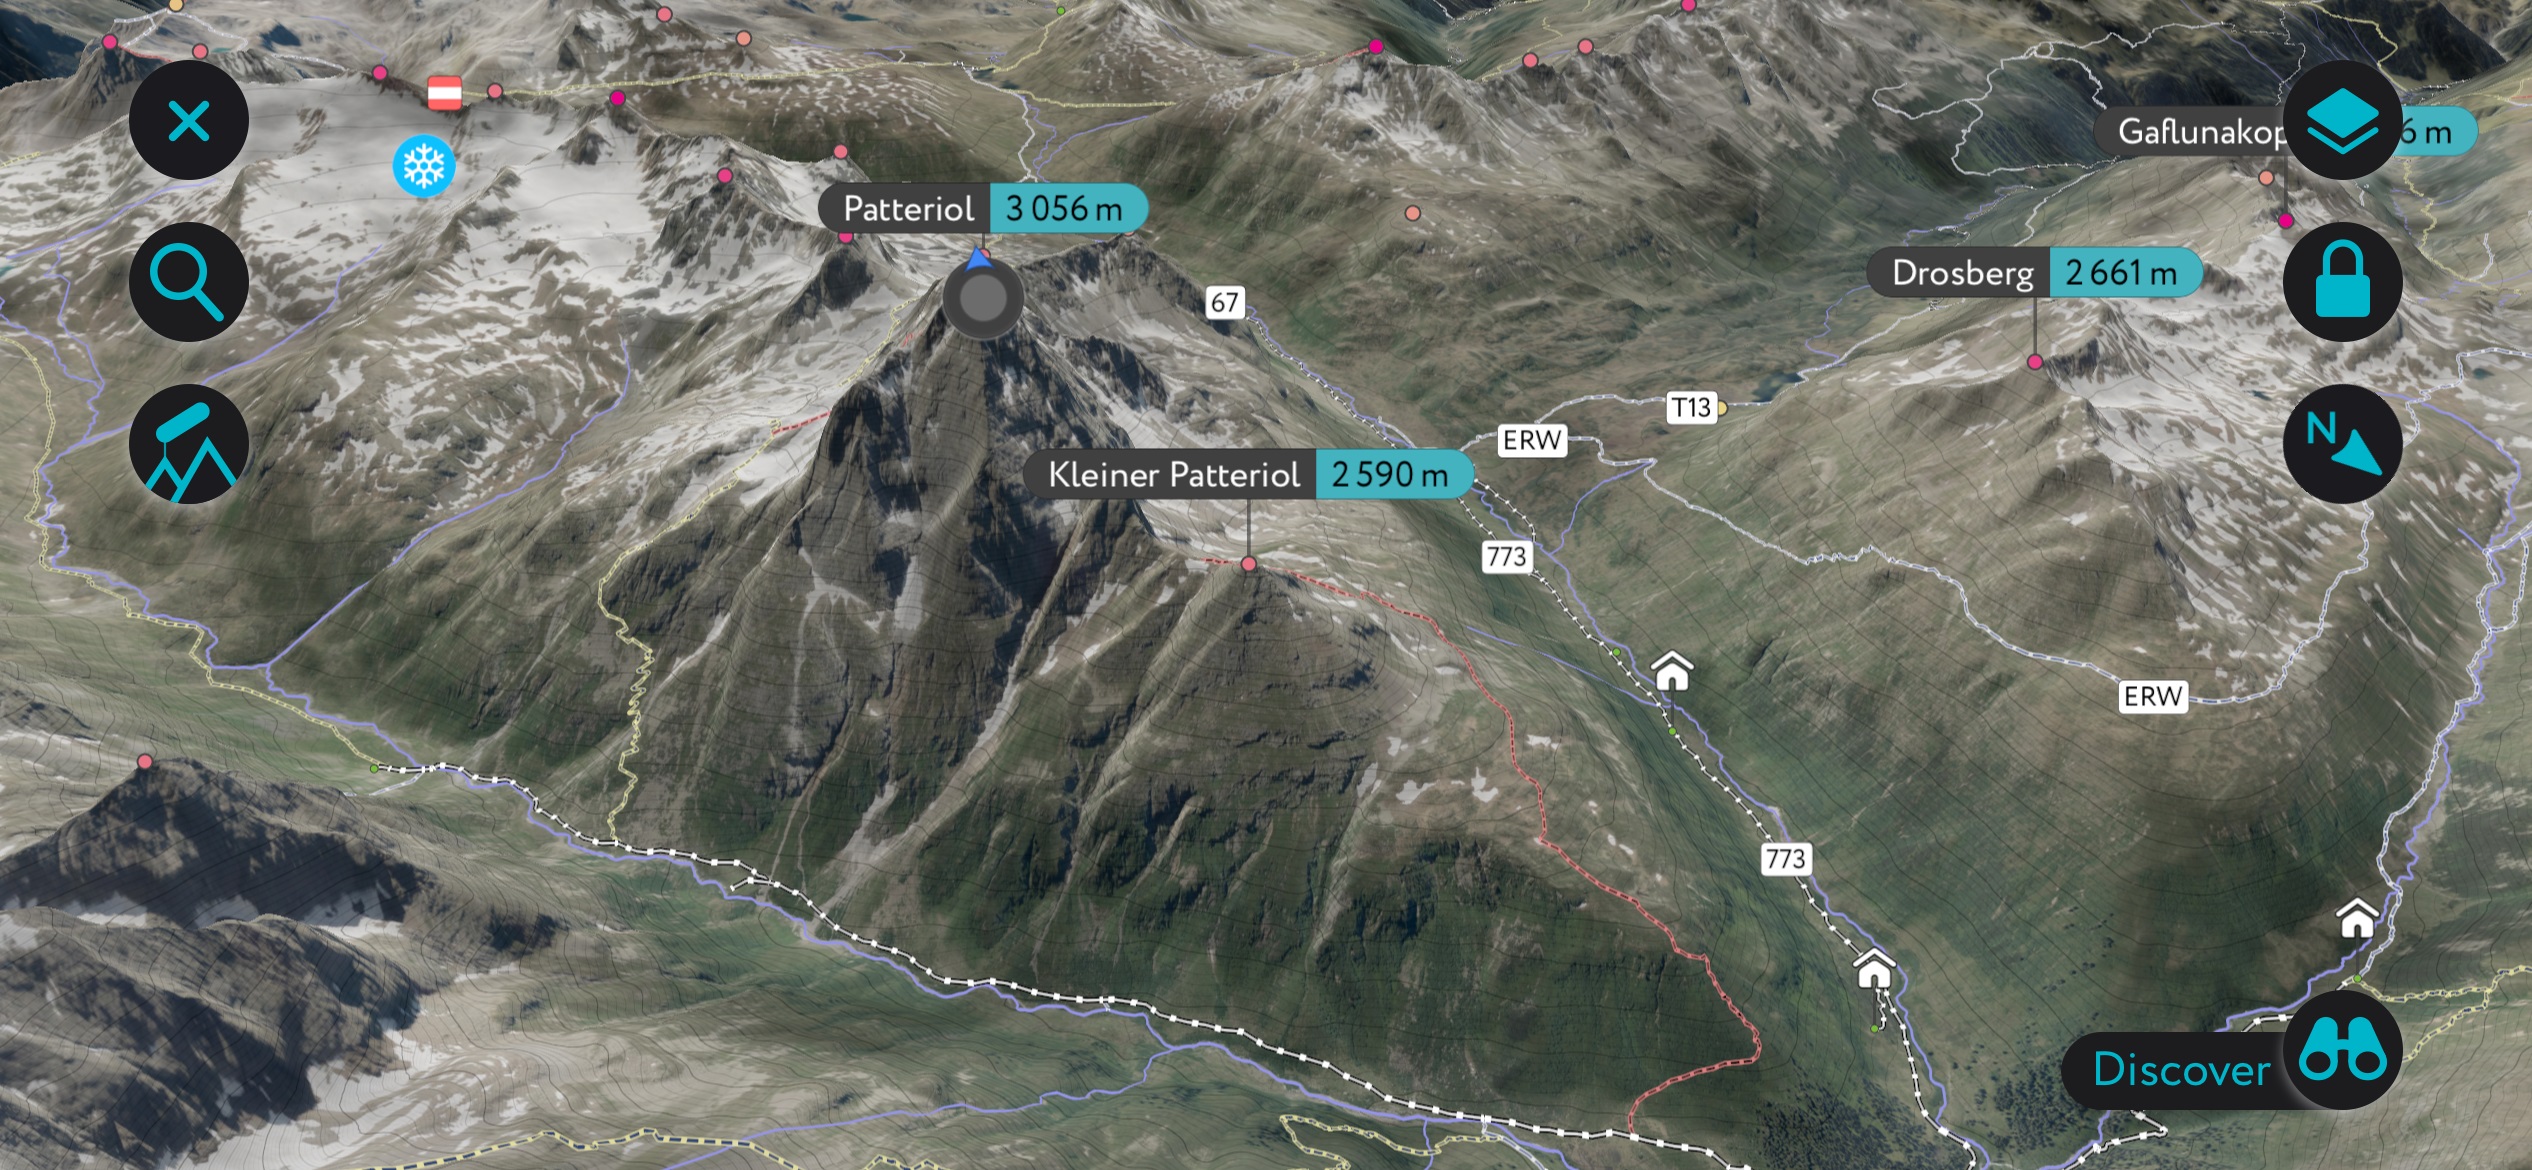 Patteriol’s imposing north face on the PeakVisor app. Verwall Alps